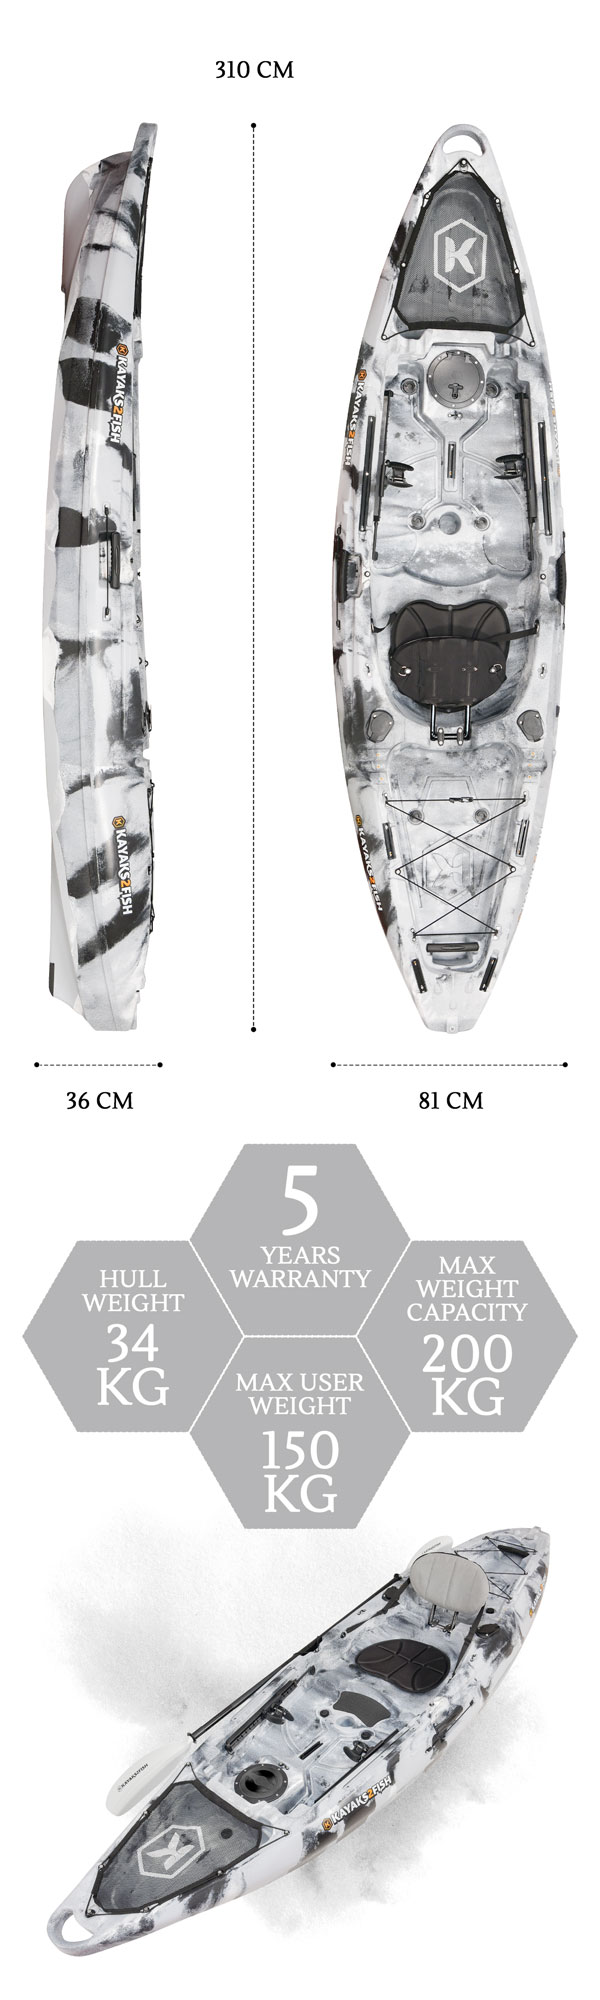 2X Watercraft Black Plastic Accessories Kayak Marine Paddle Holder Hot Boat I4M 